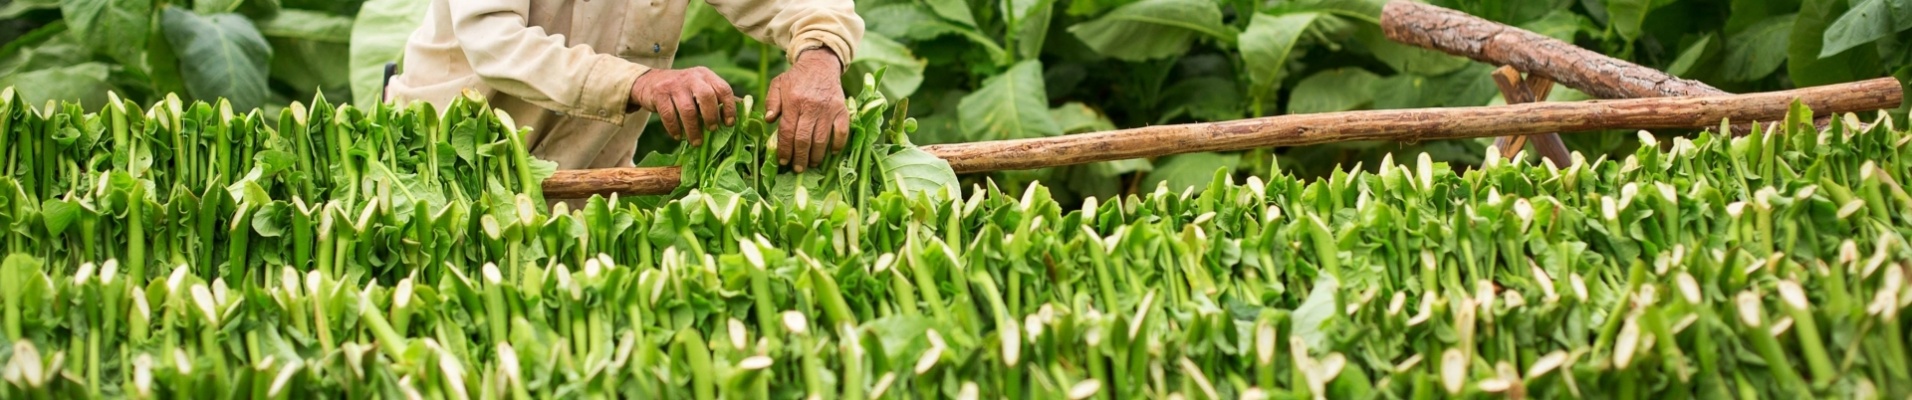 vinales-tabac-agriculture-cuba